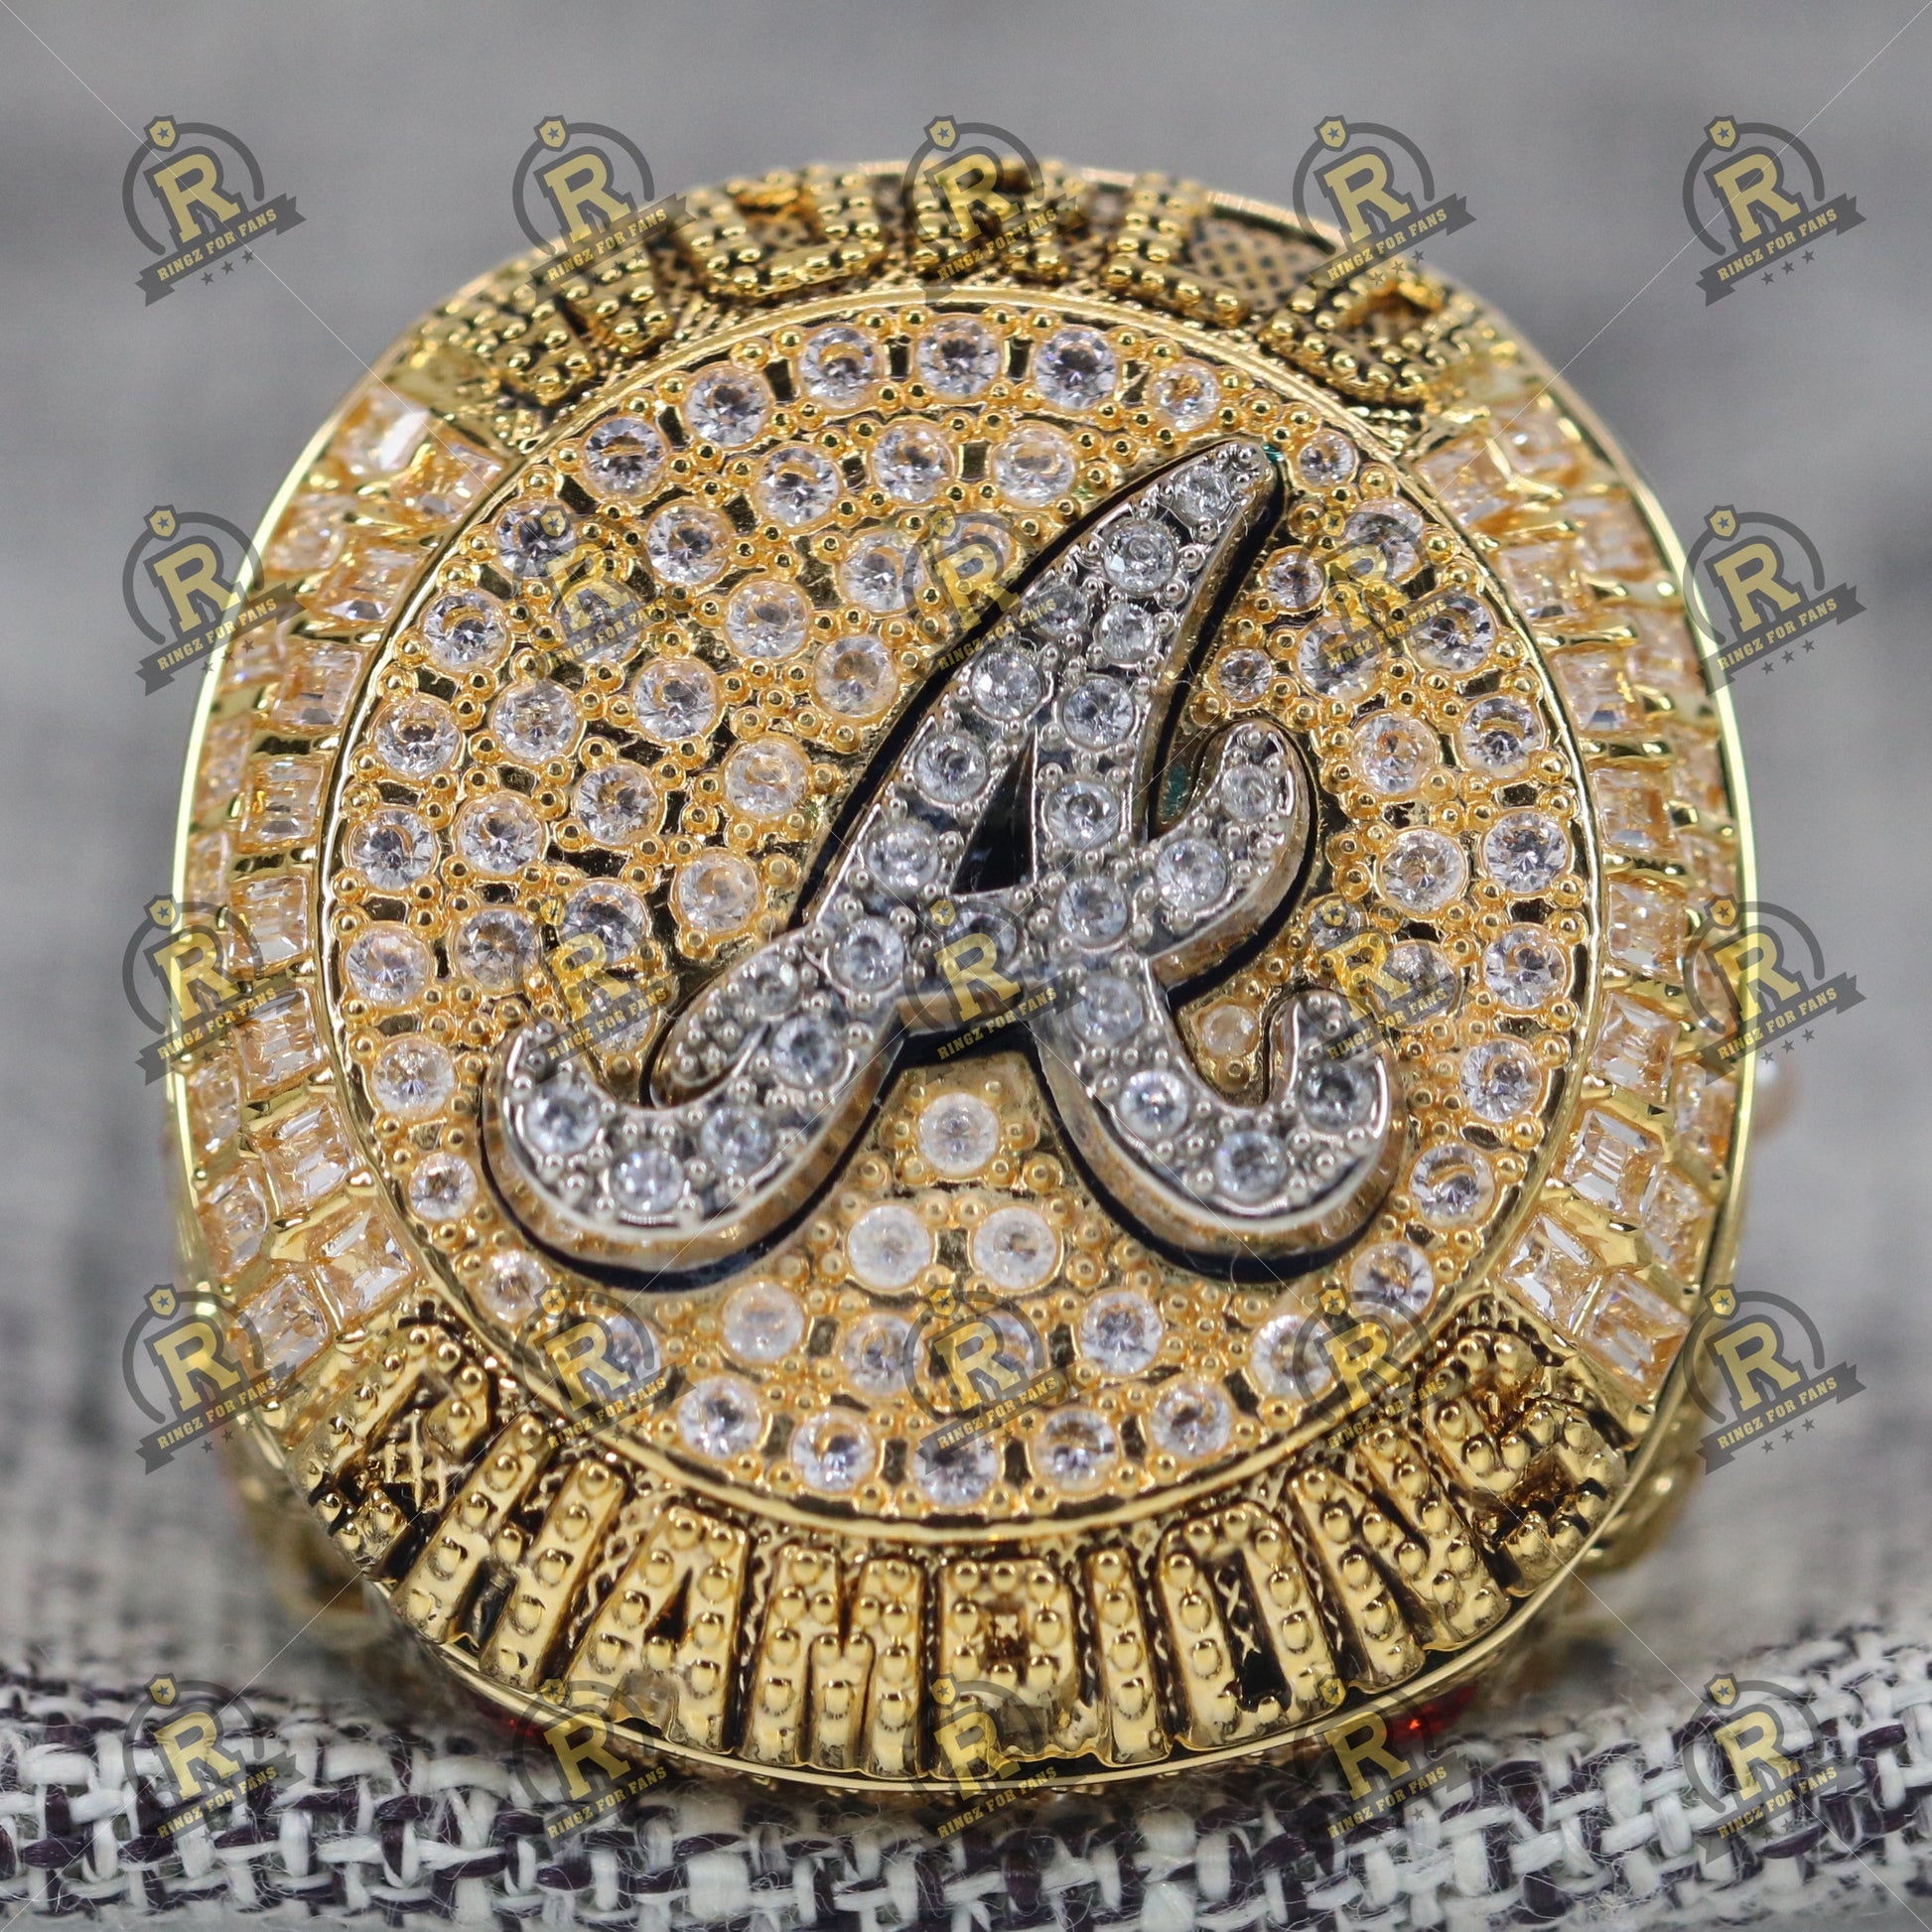 2021 Atlanta Braves Championship Ring2021 Atlanta Braves World Series Ring